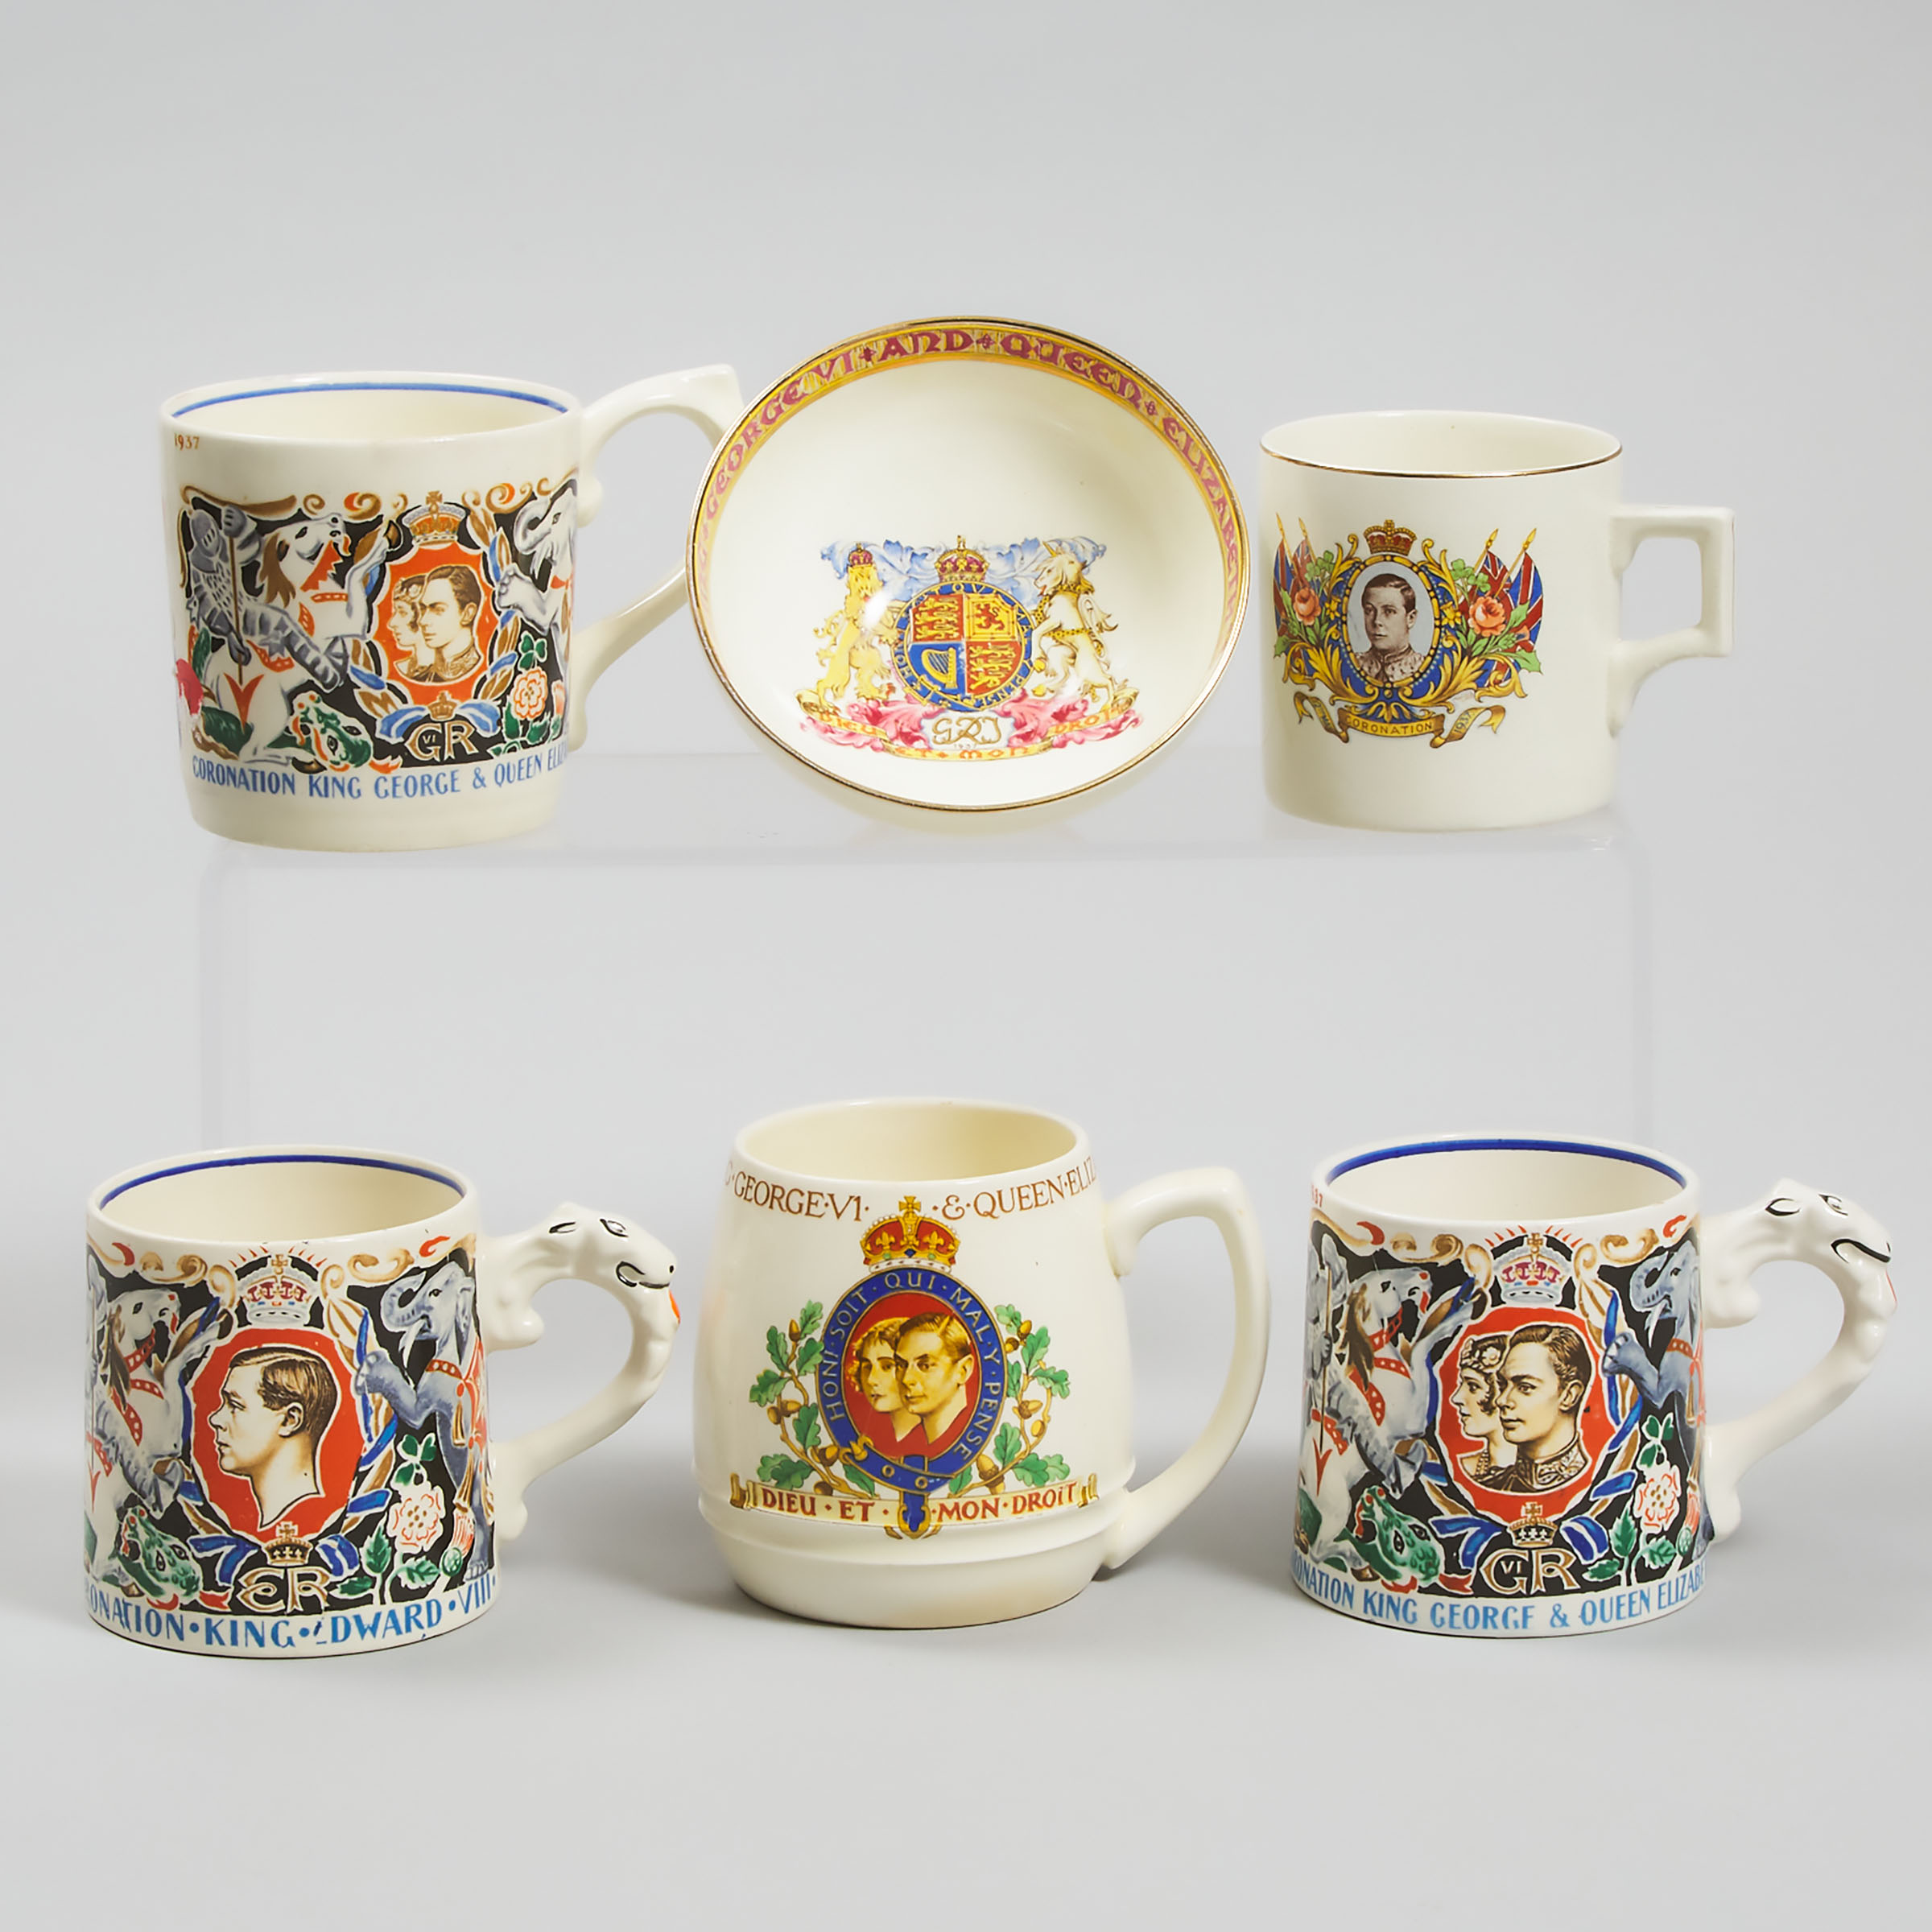 Six Coronation Souvenir Wares for Edward VIII and George VI and Elizabeth, 1936/7